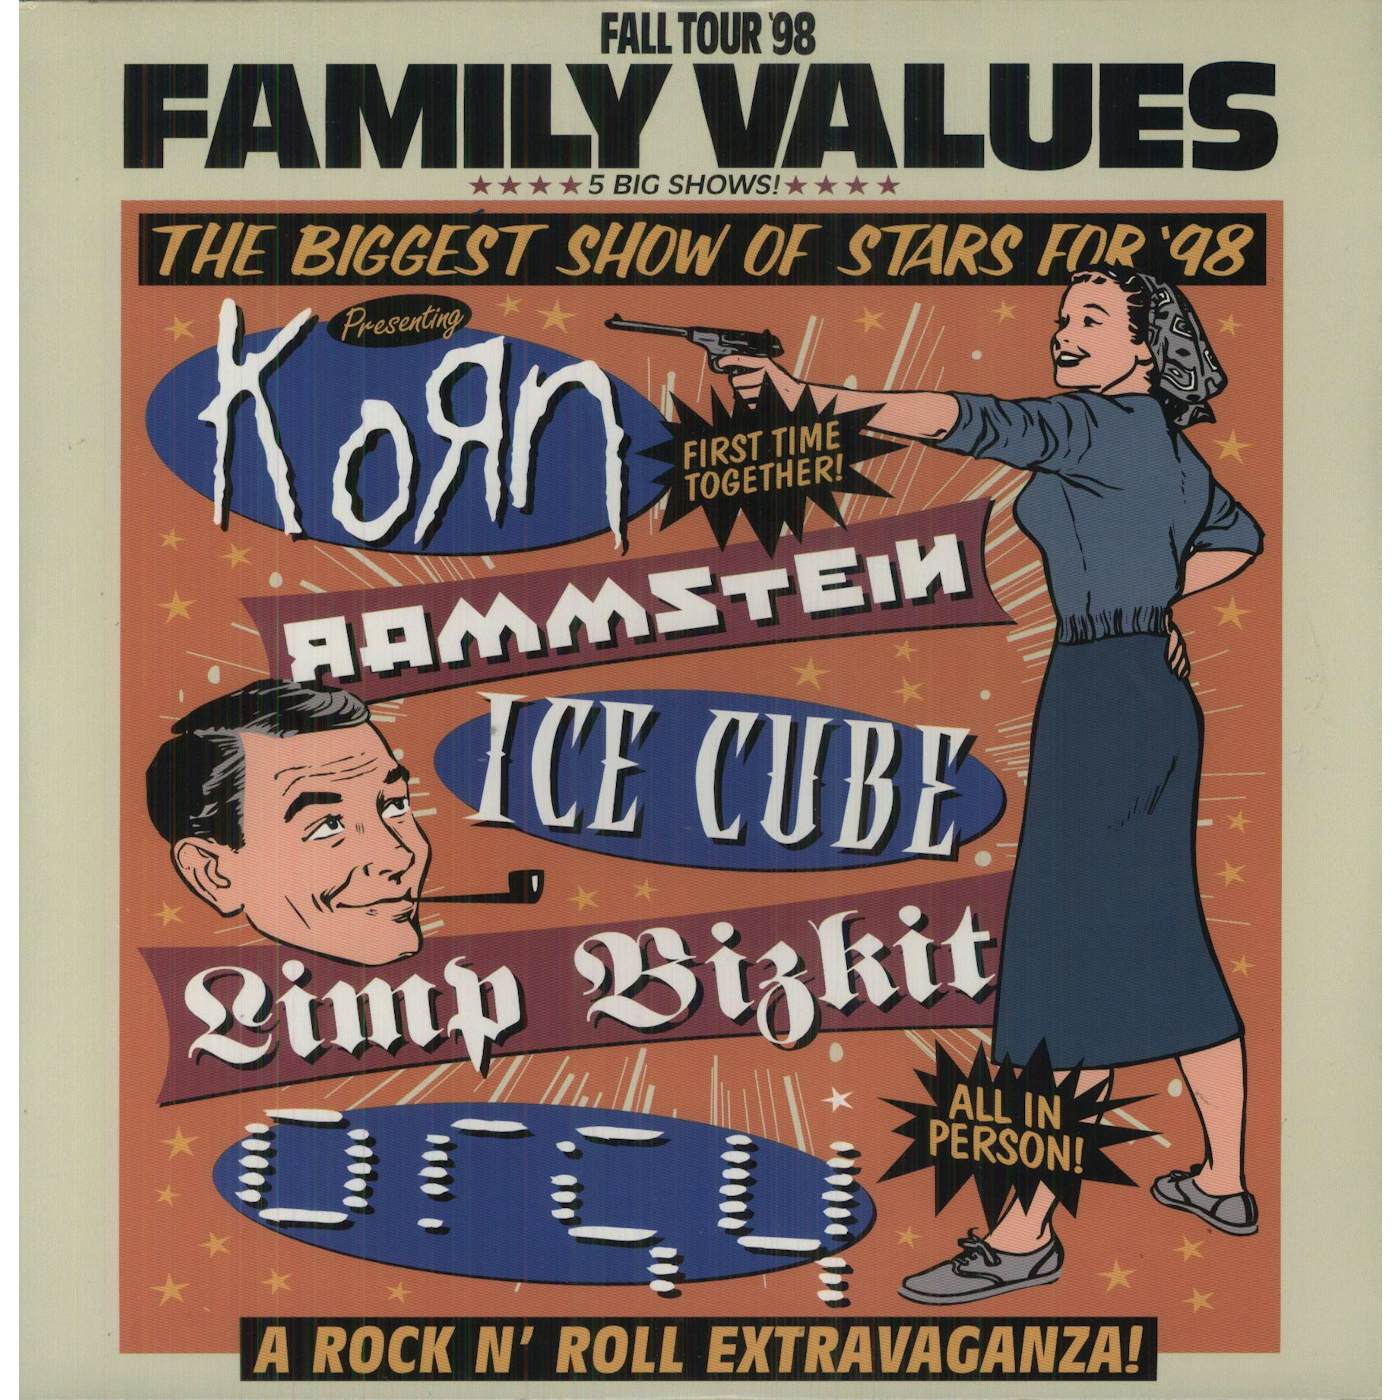 FAMILY VALUES TOUR / VARIOUS Vinyl Record